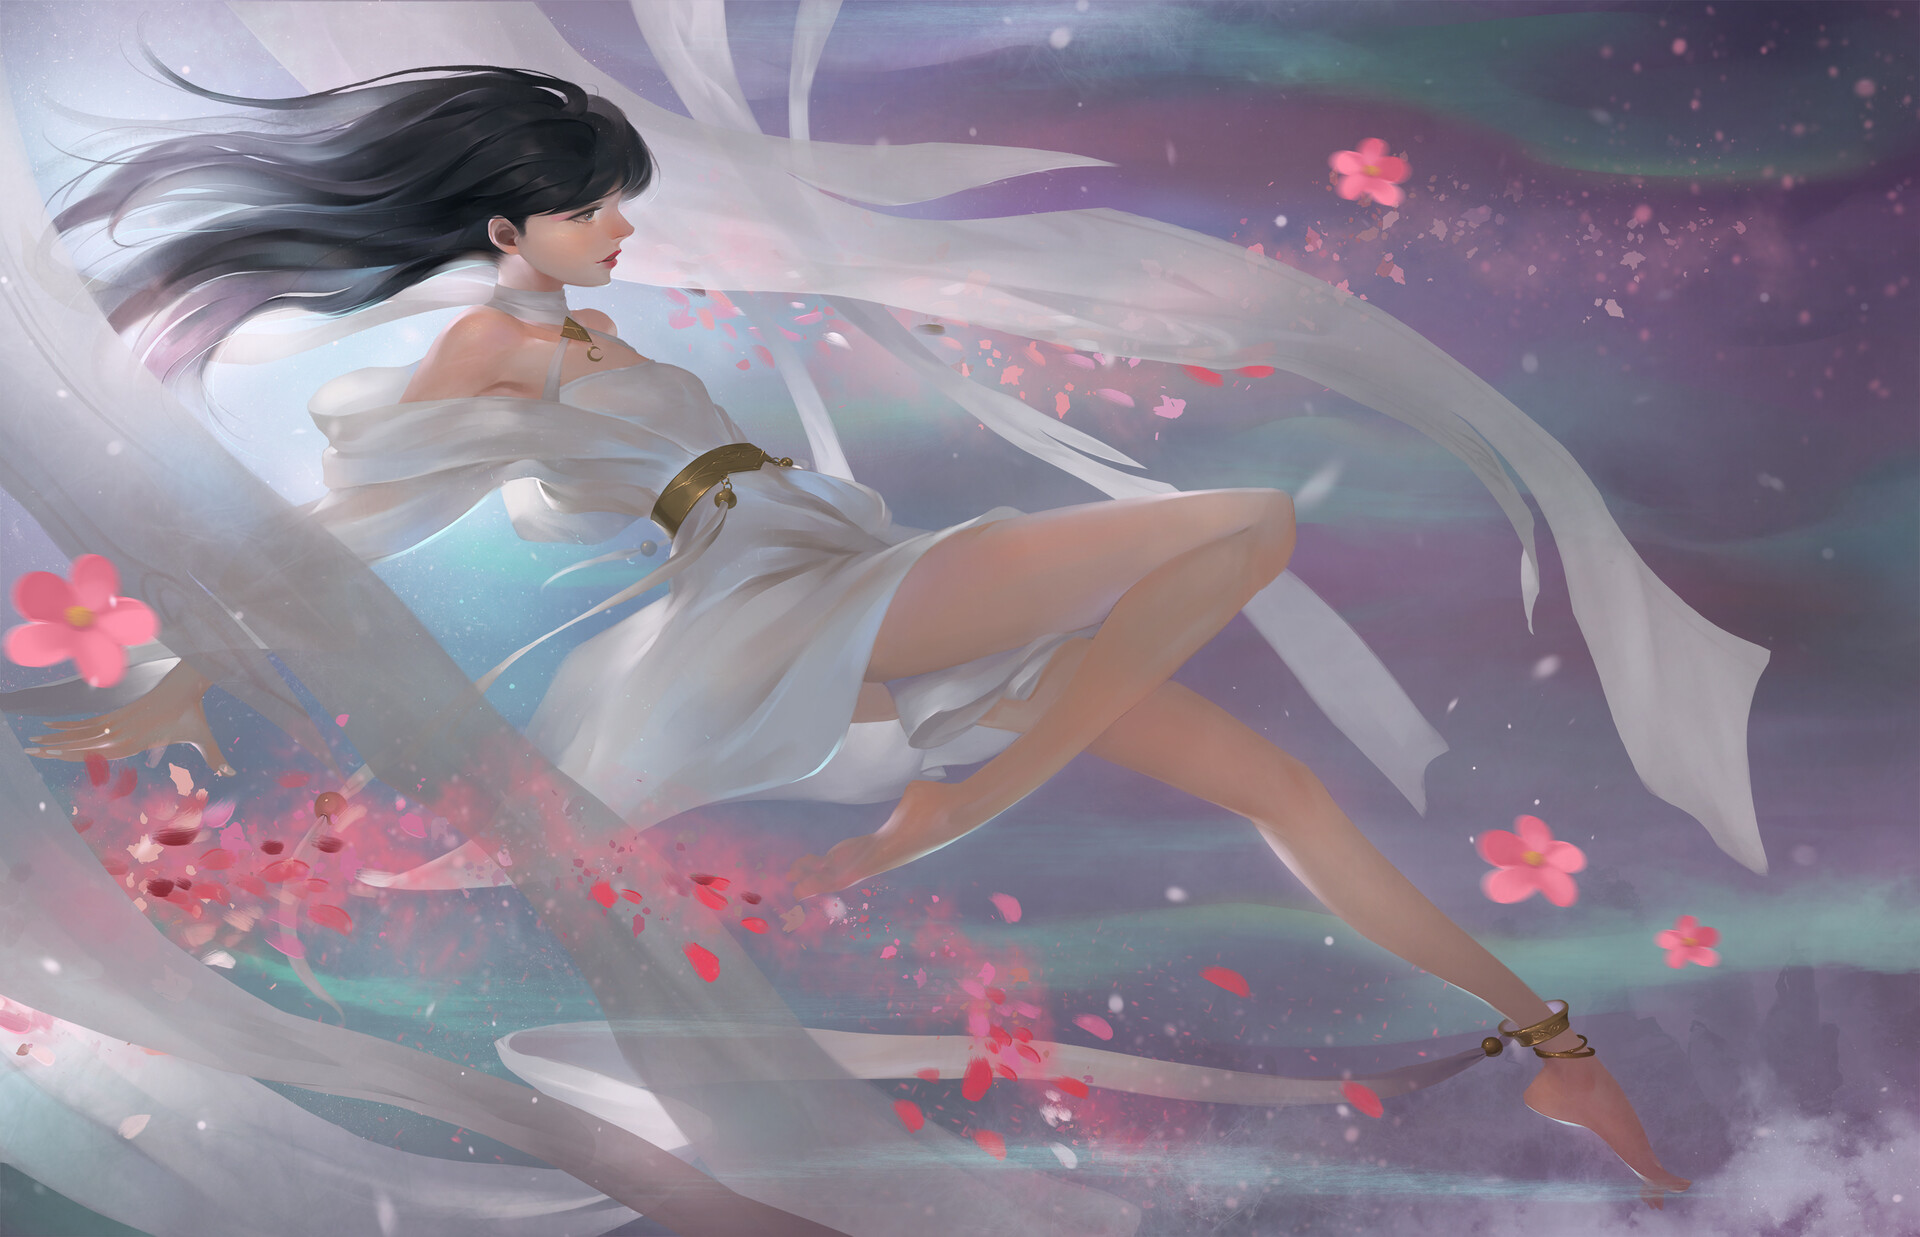 Jay JiwooPark Fantasy Girl Artwork Fantasy Art White Dress Sky Petals 1920x1237